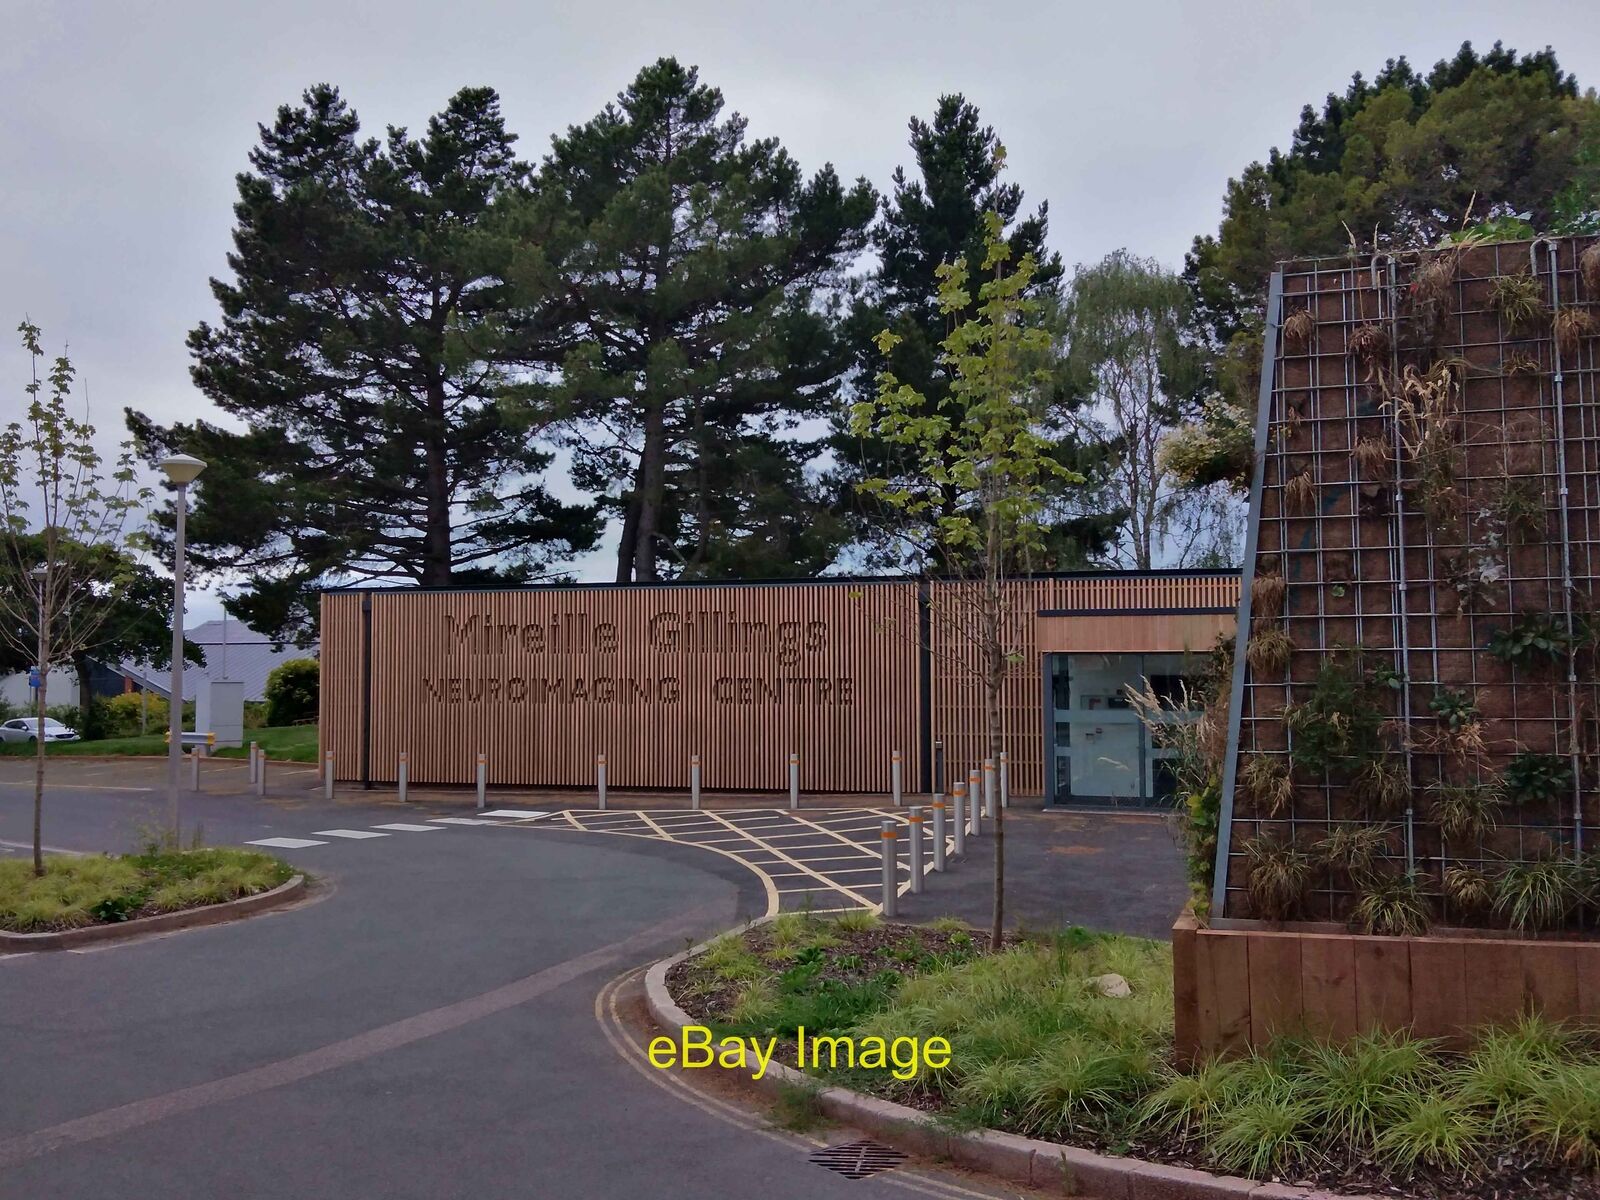 Photo 6x4 Neuroimaging centre, RD&E Hospital, Exeter  c2020